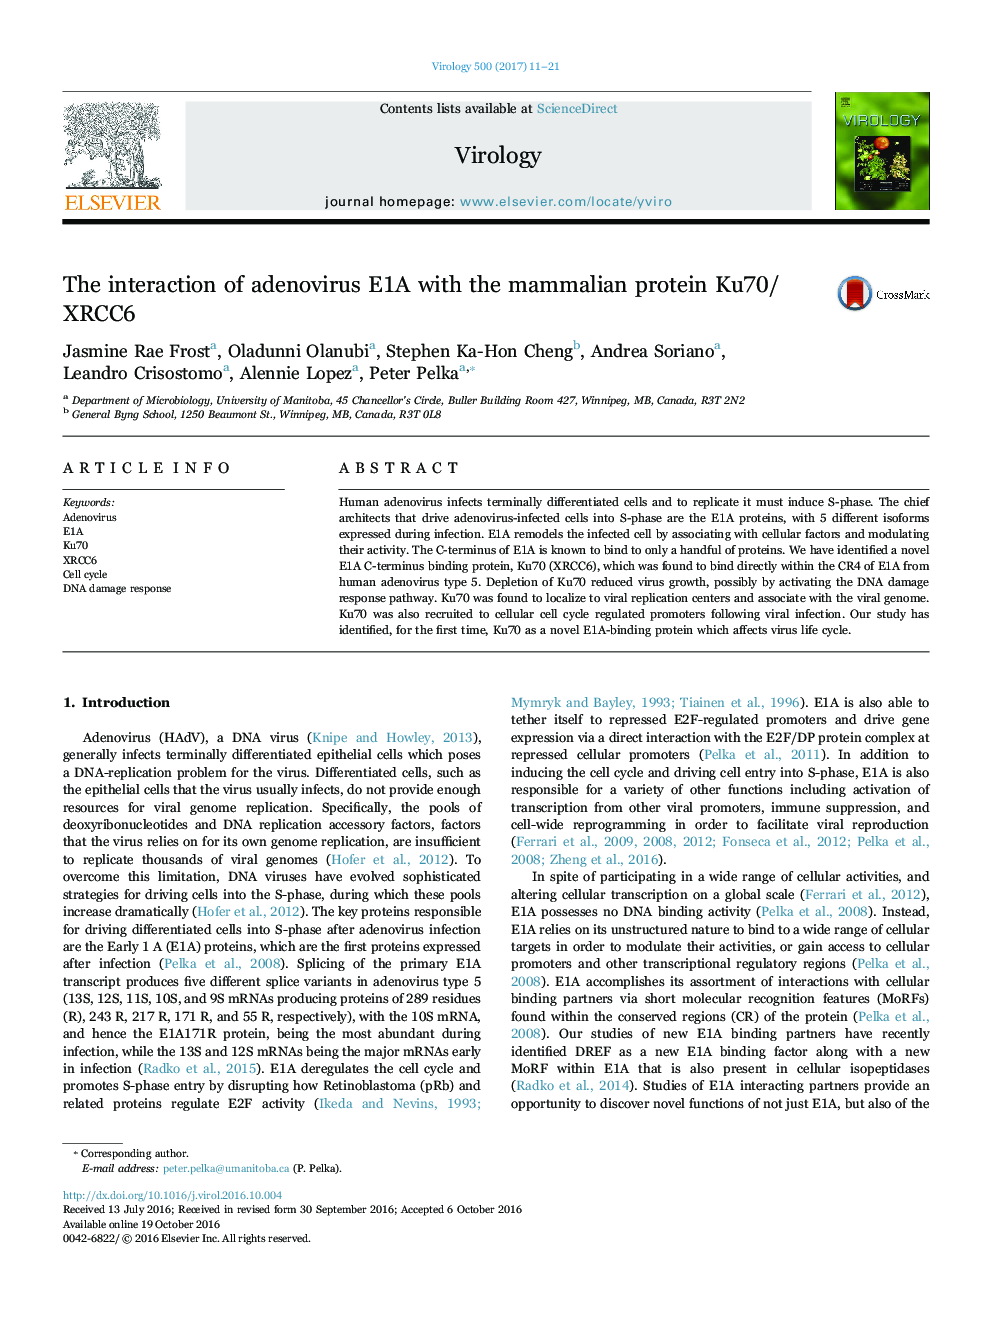 The interaction of adenovirus E1A with the mammalian protein Ku70/XRCC6